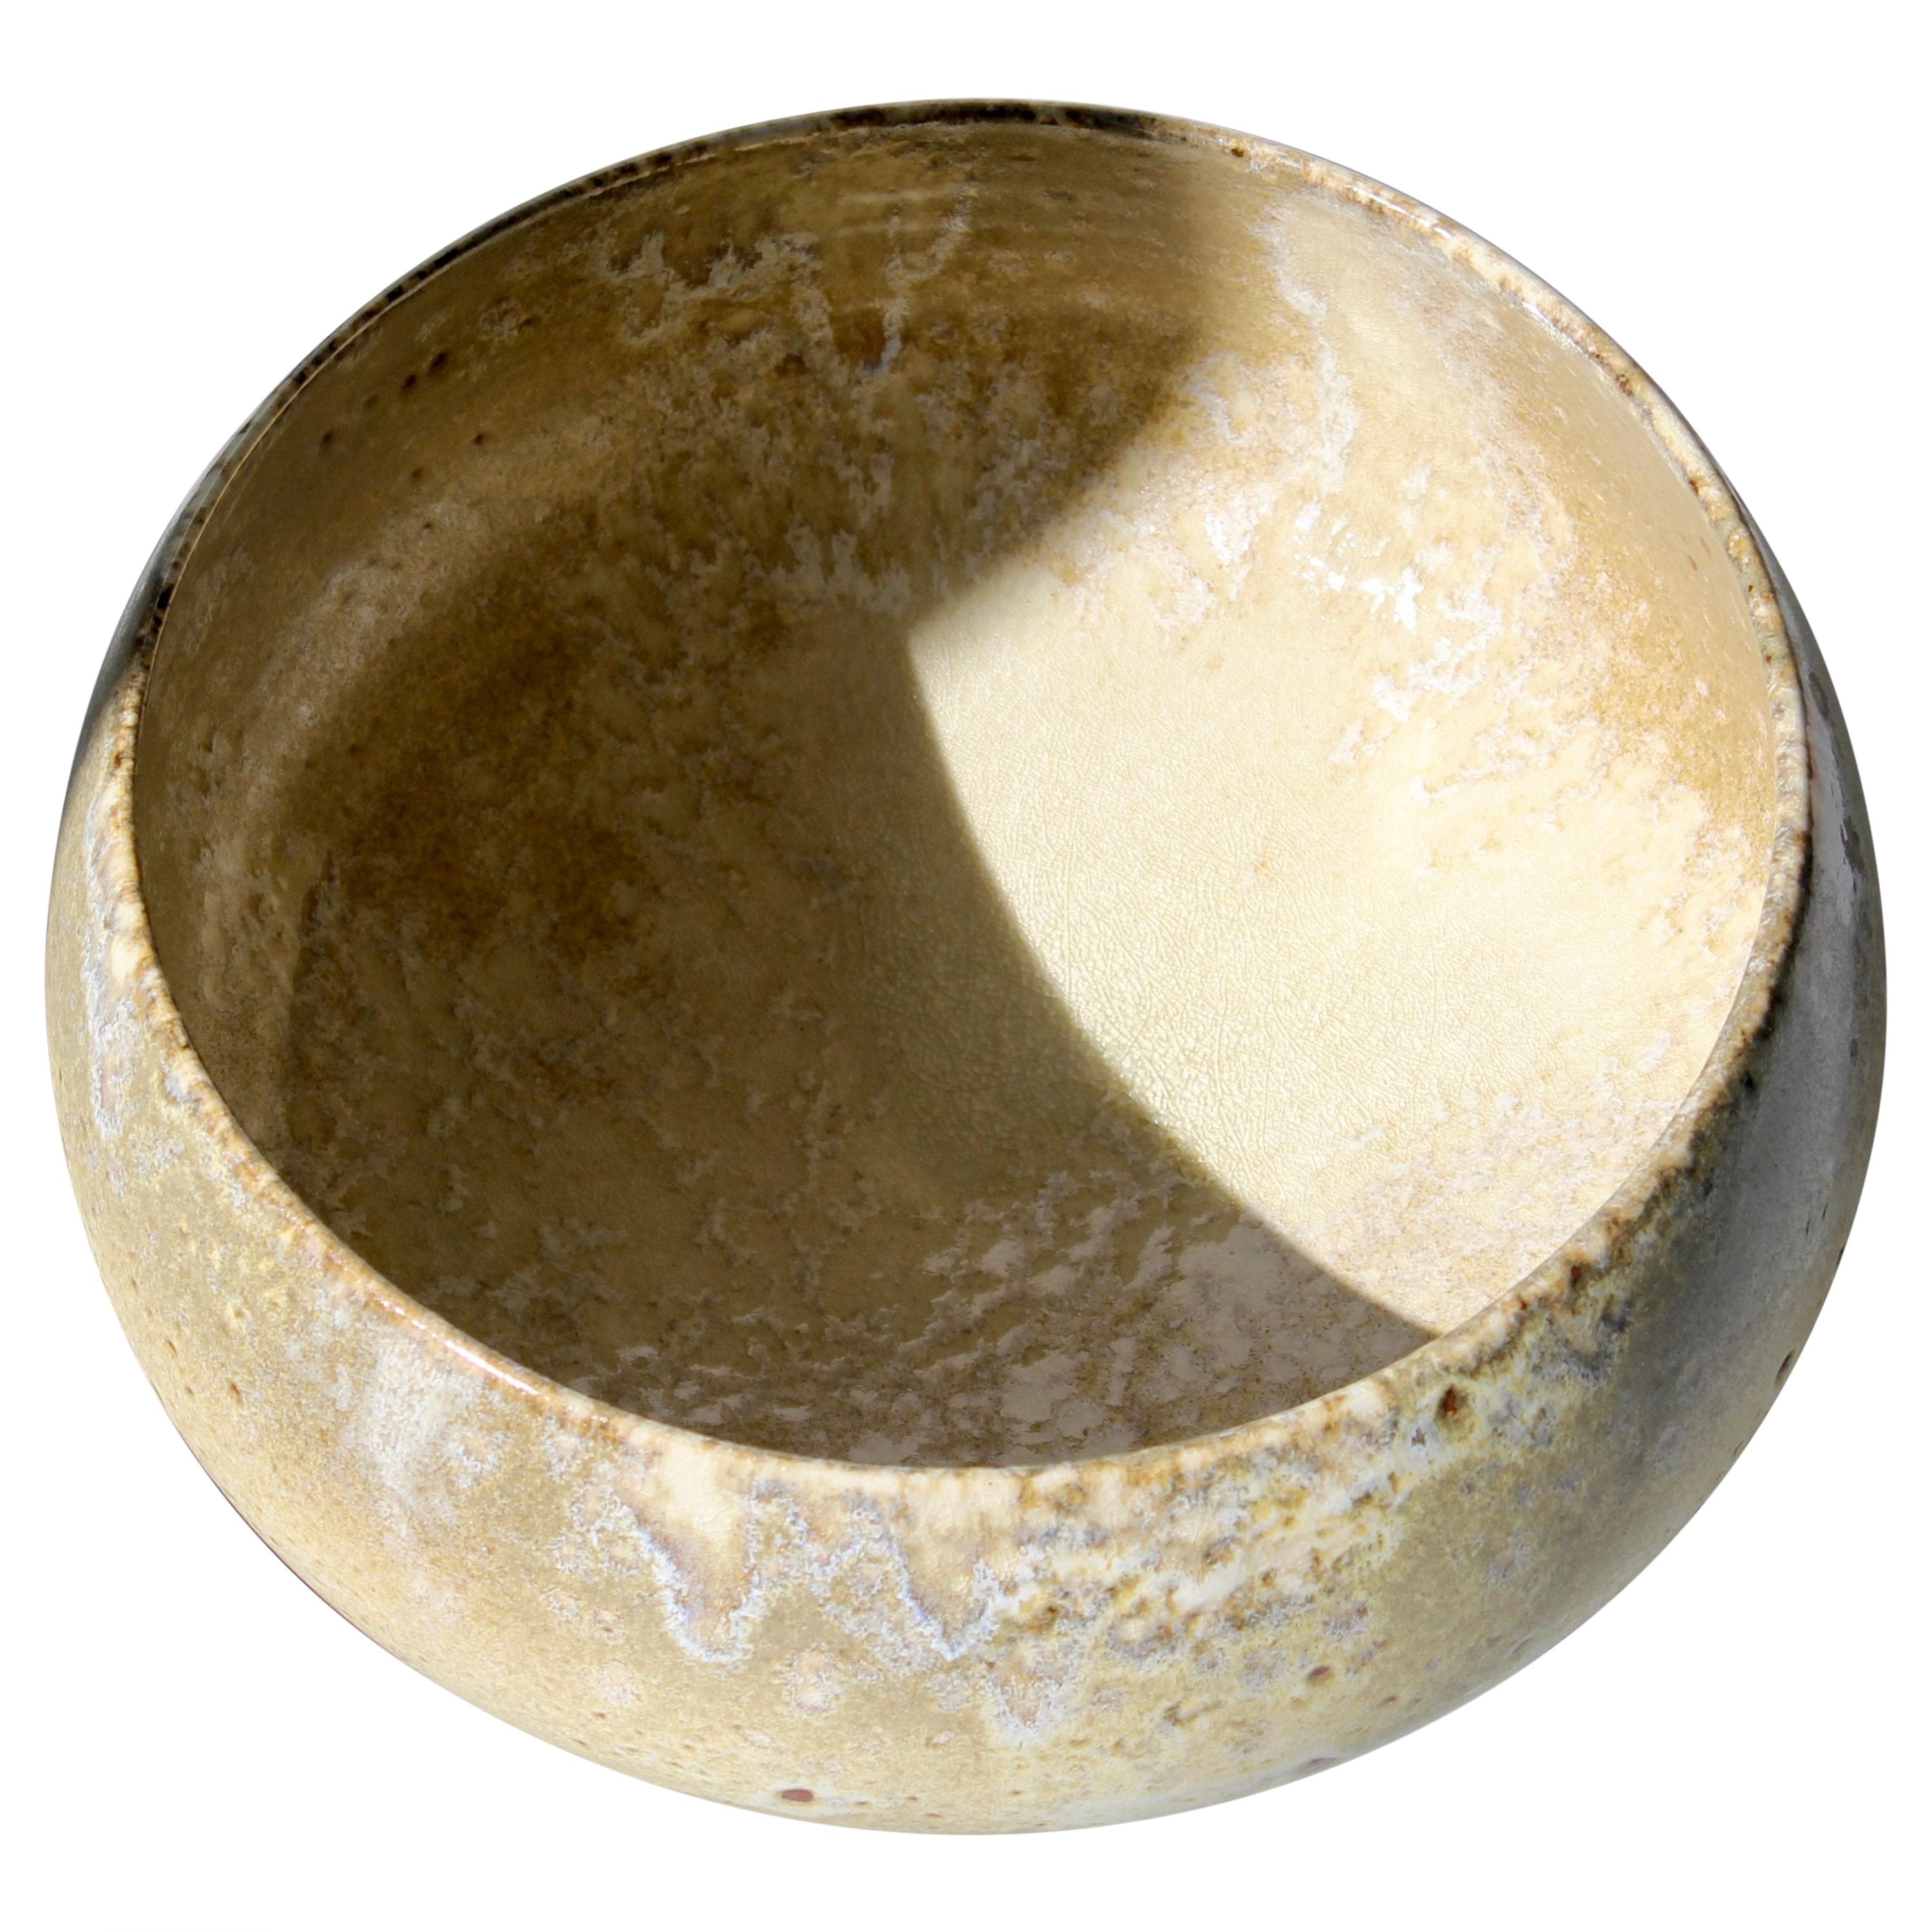 KH Würtz Large Cauldron Bowl in Sand Glaze